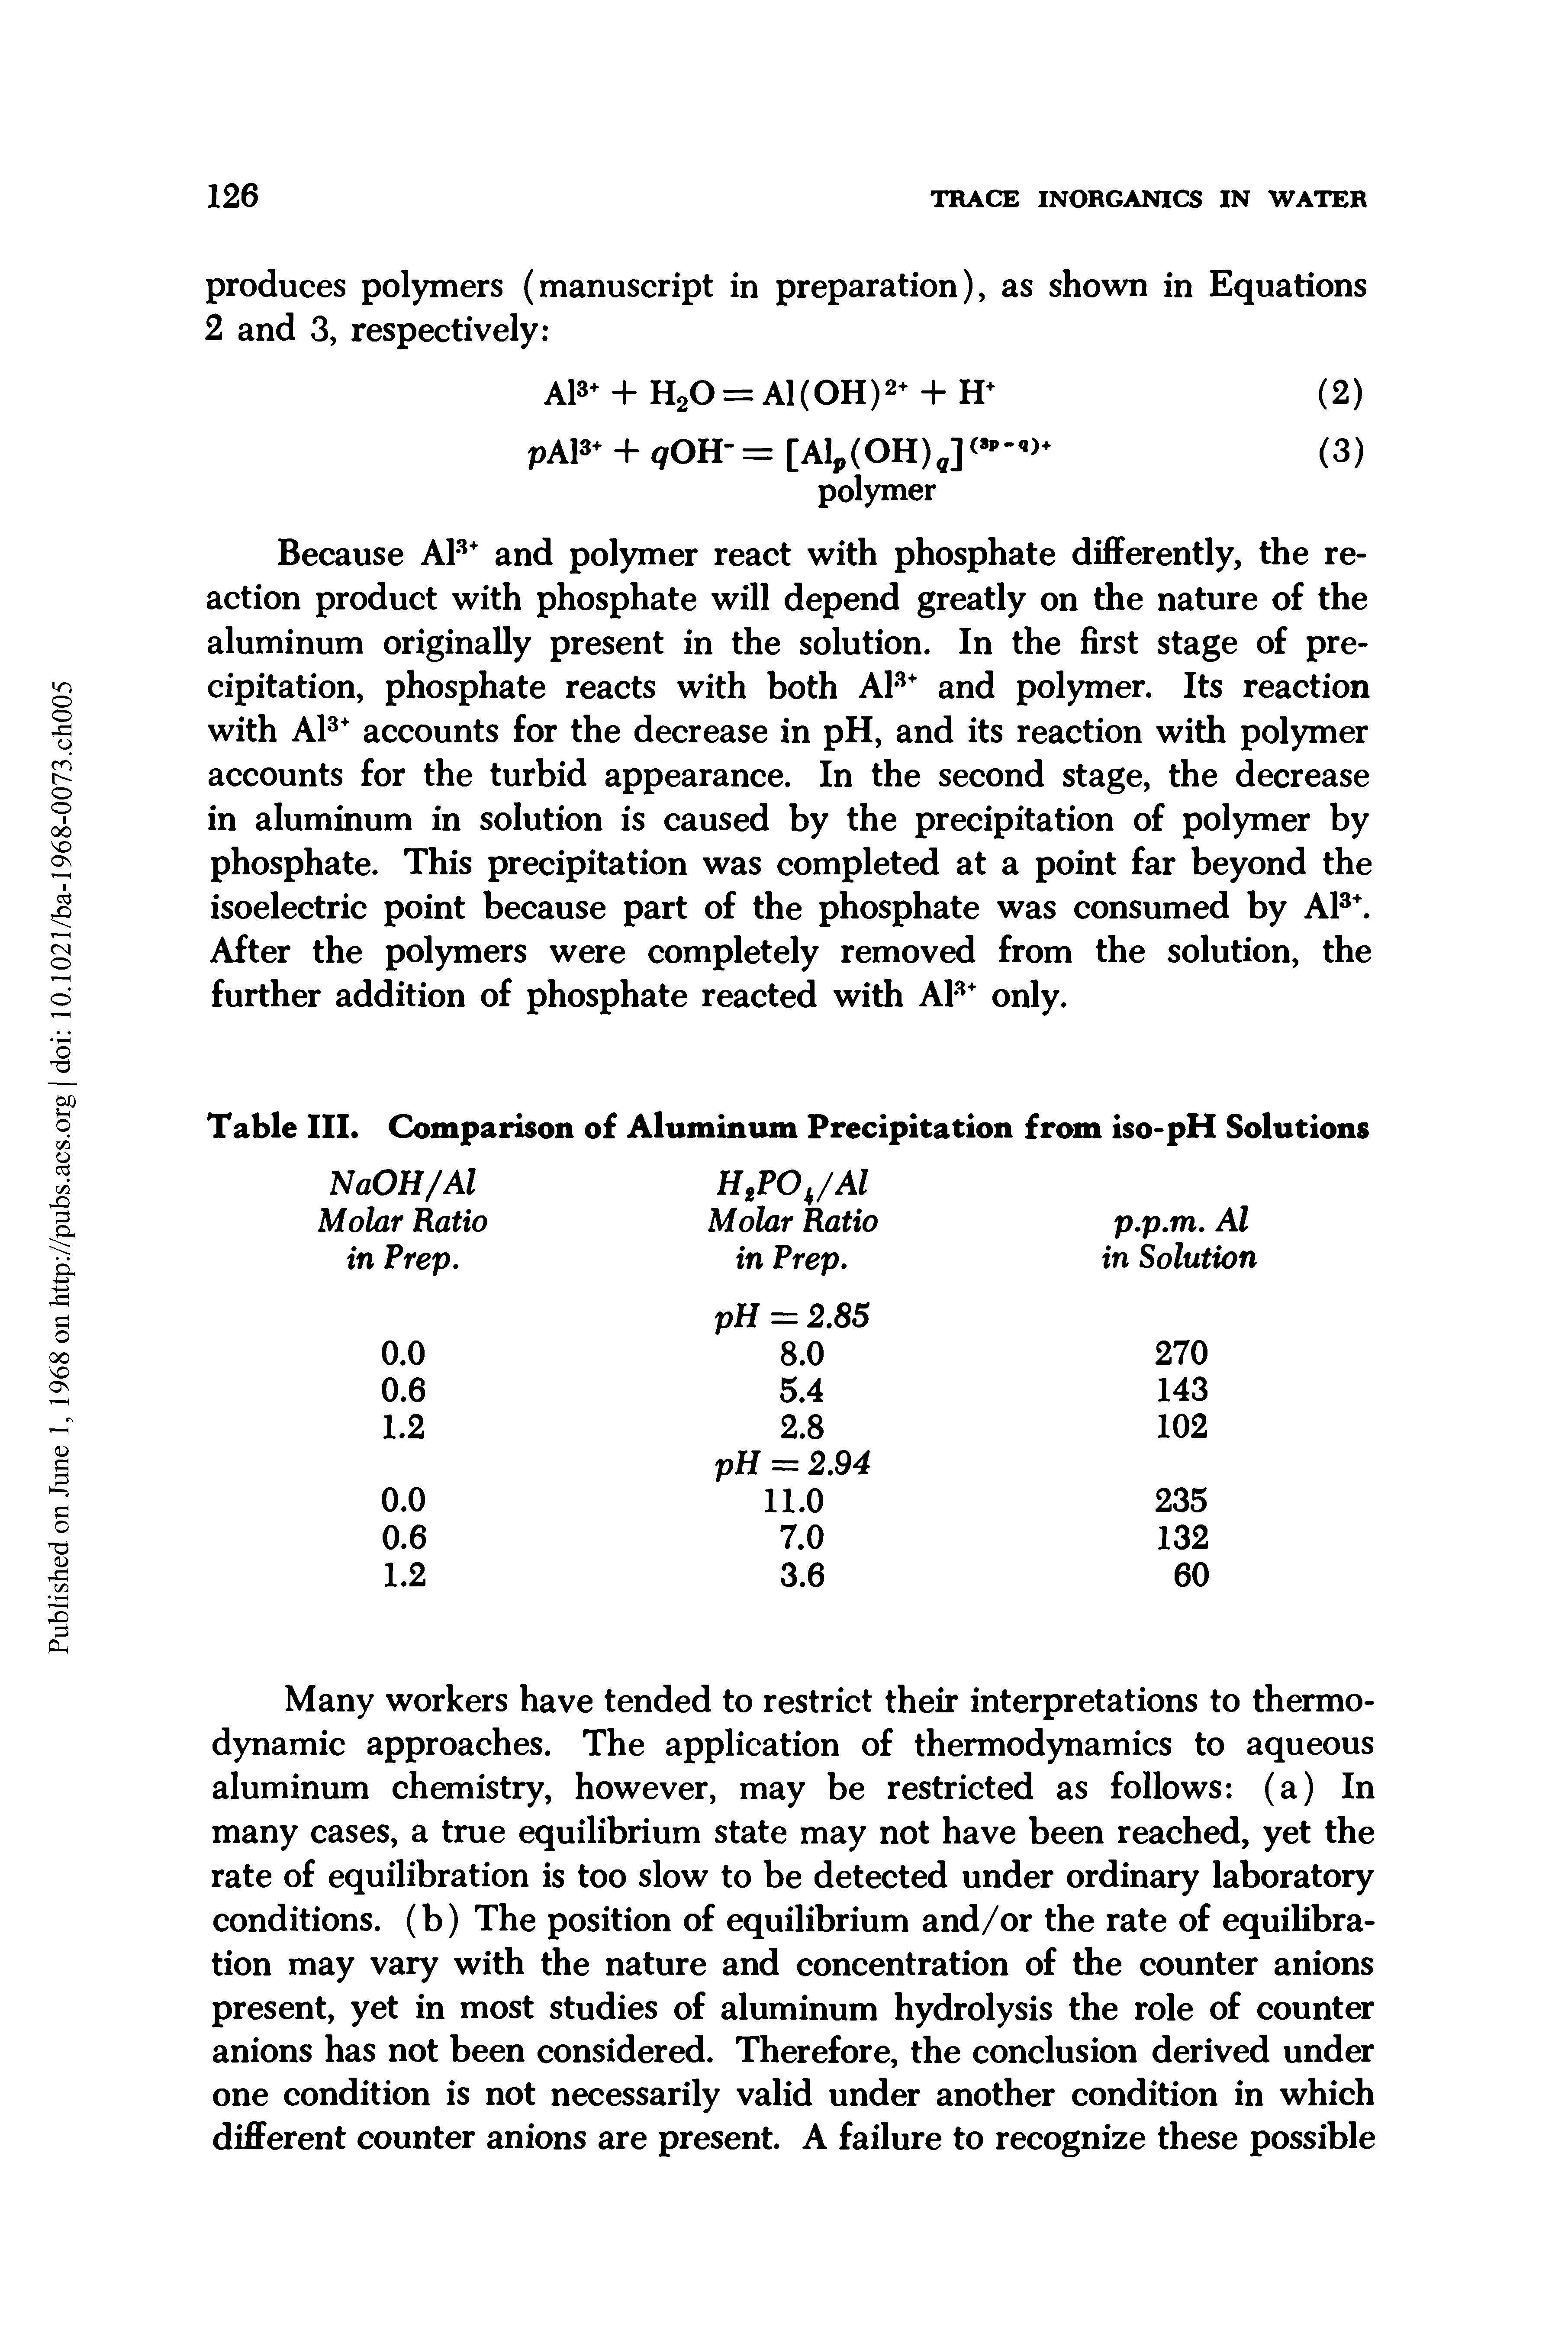 Table III. Comparison of Aluminum Precipitation from iso-pH Solutions...